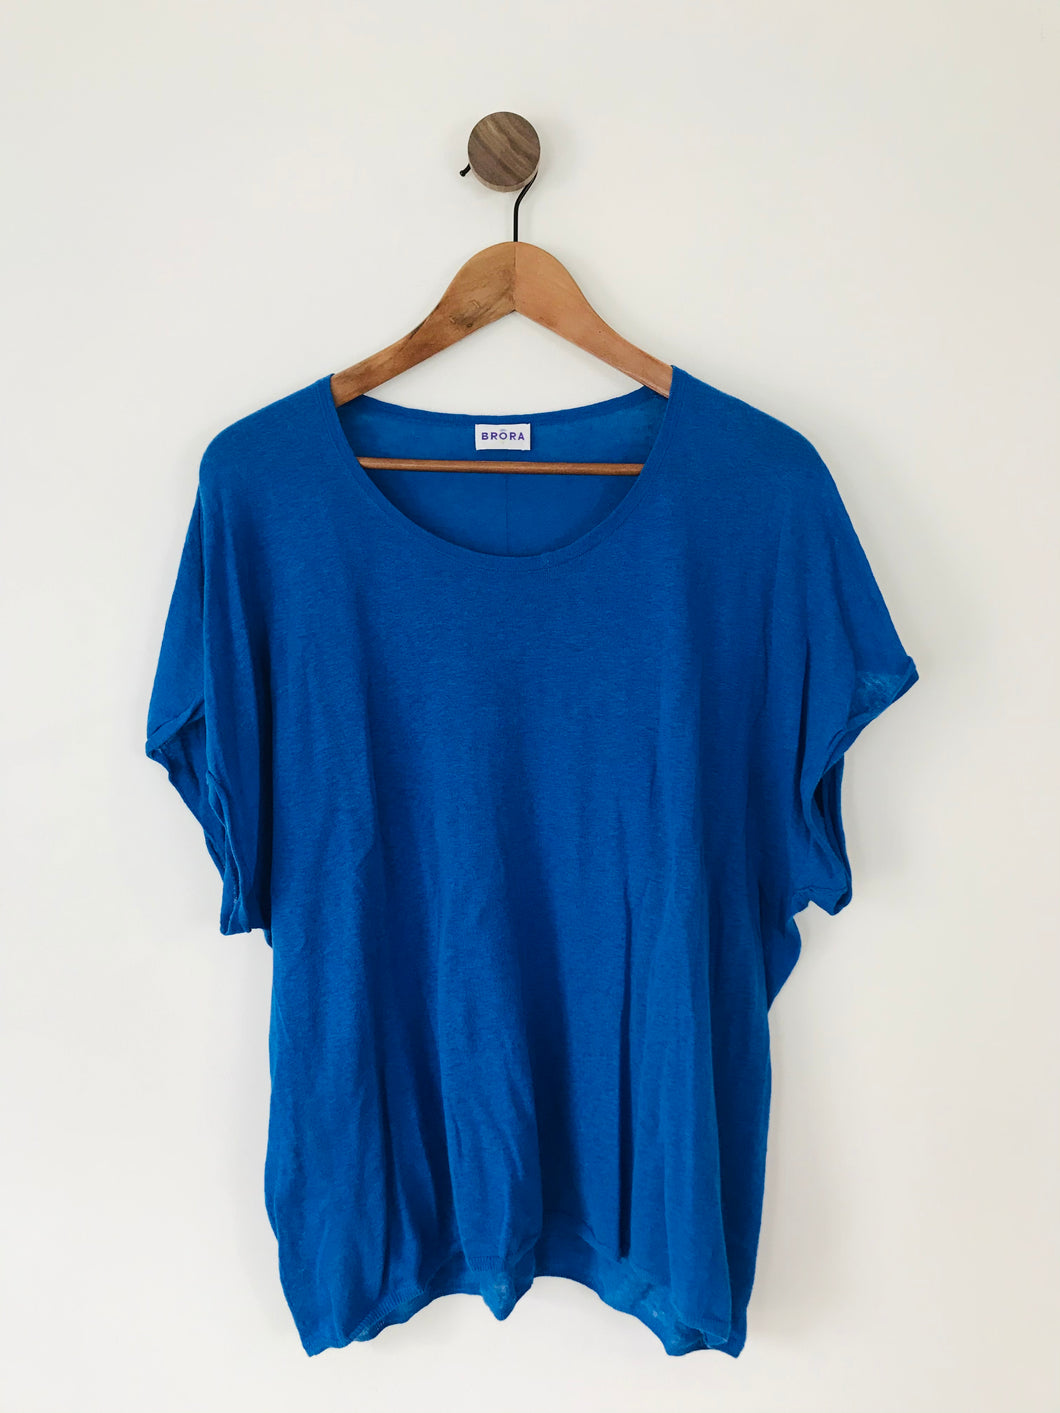 Brora Women’s Linen Cotton Wide Neck Top Blouse | UK16-18 | Blue